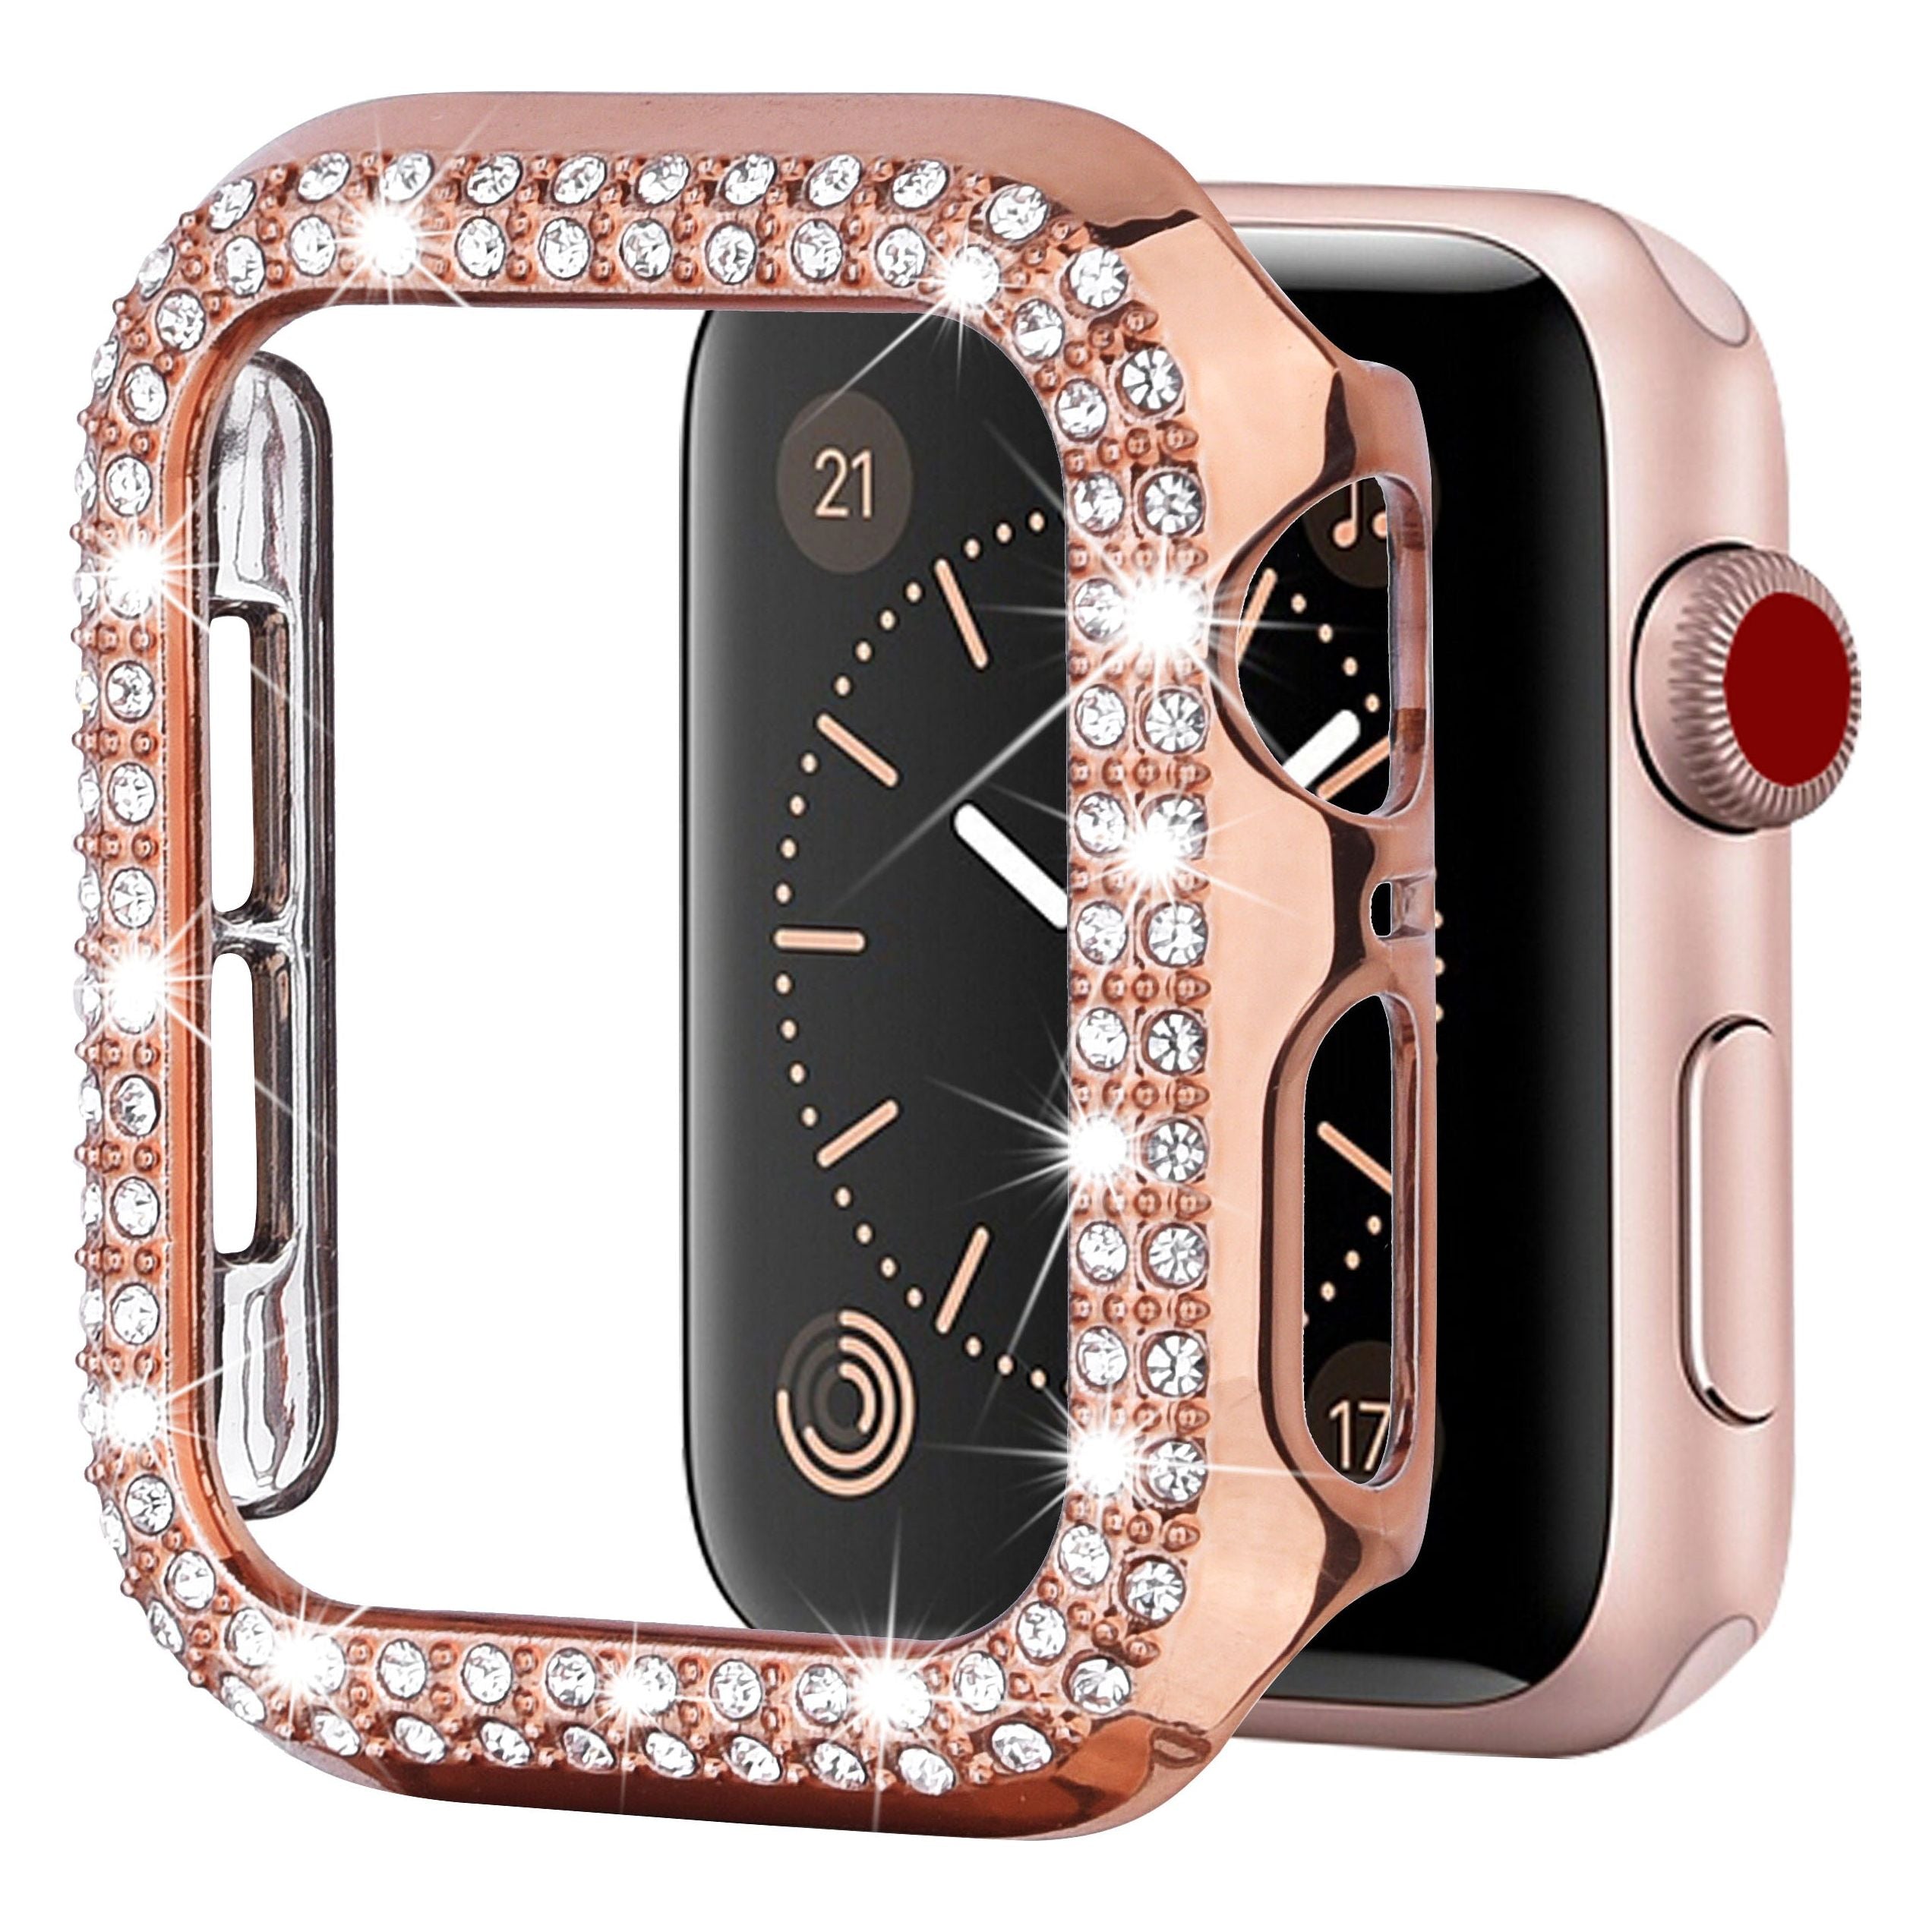 Diamond Watch Case (SALE!)